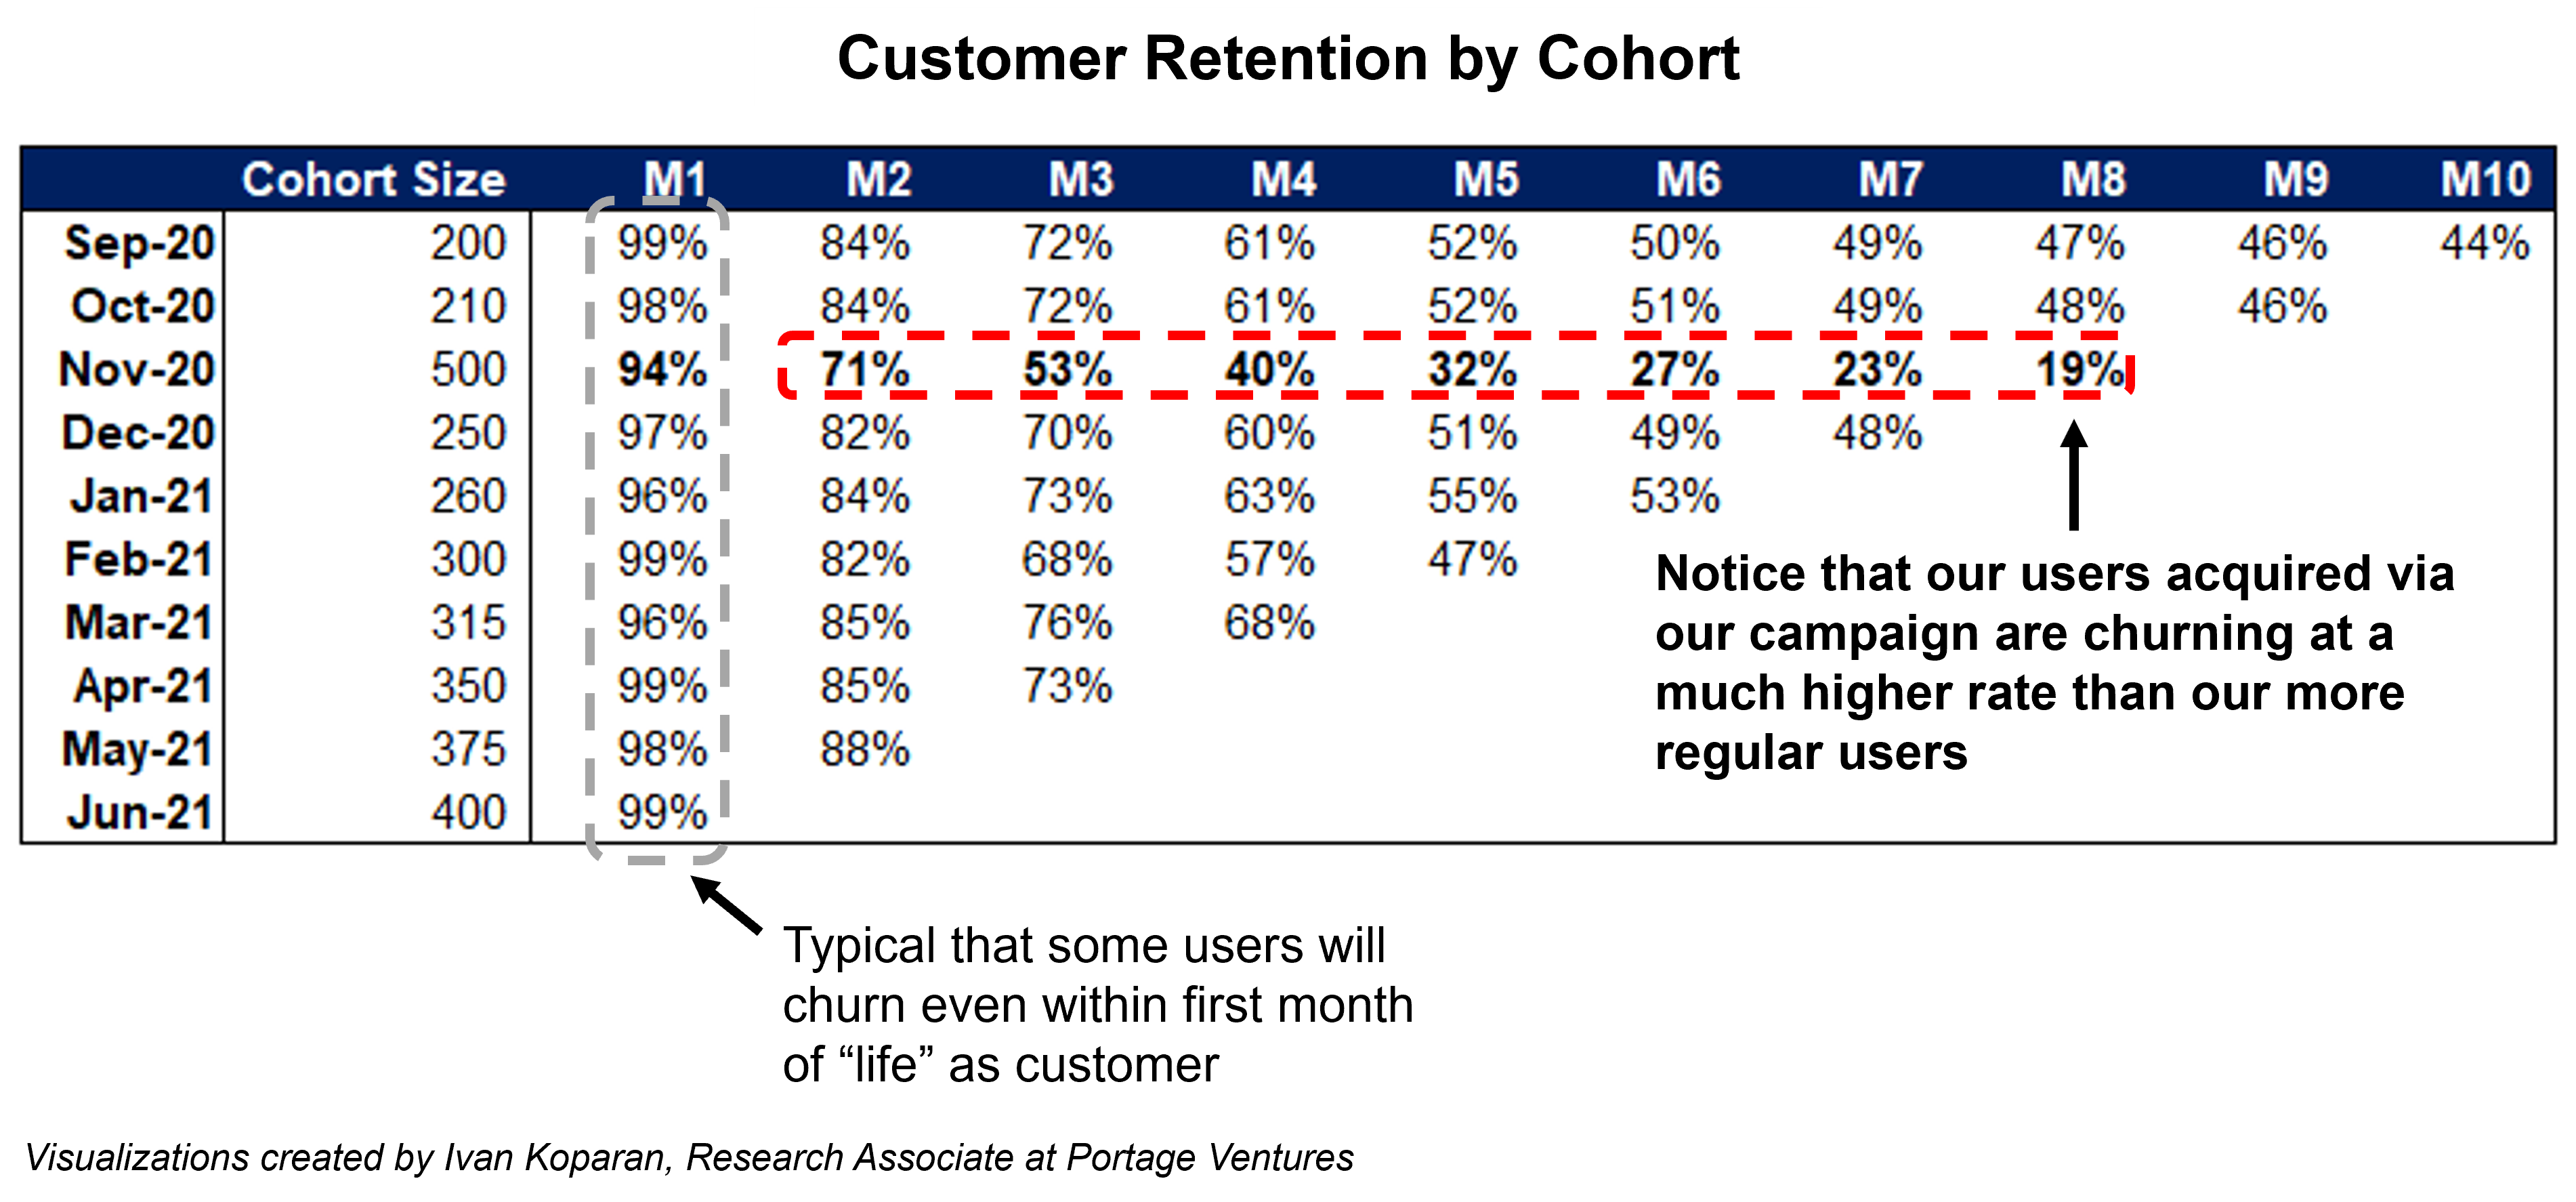 Customer retention by cohort